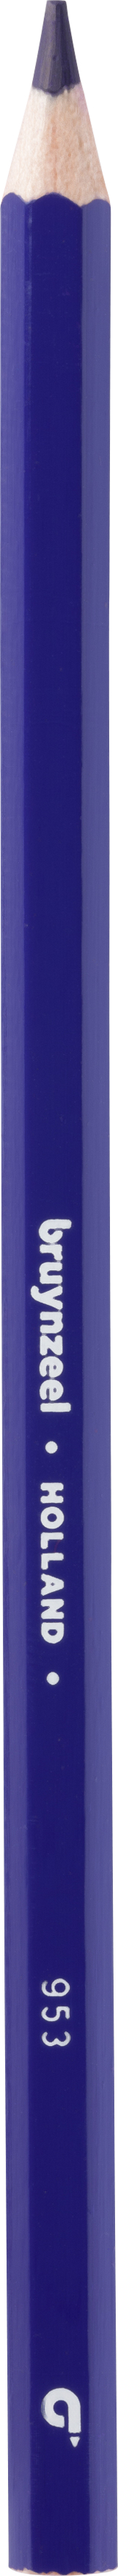 BRUYNZEEL Crayon de couleur Super 3.3mm 60516953 violet violet